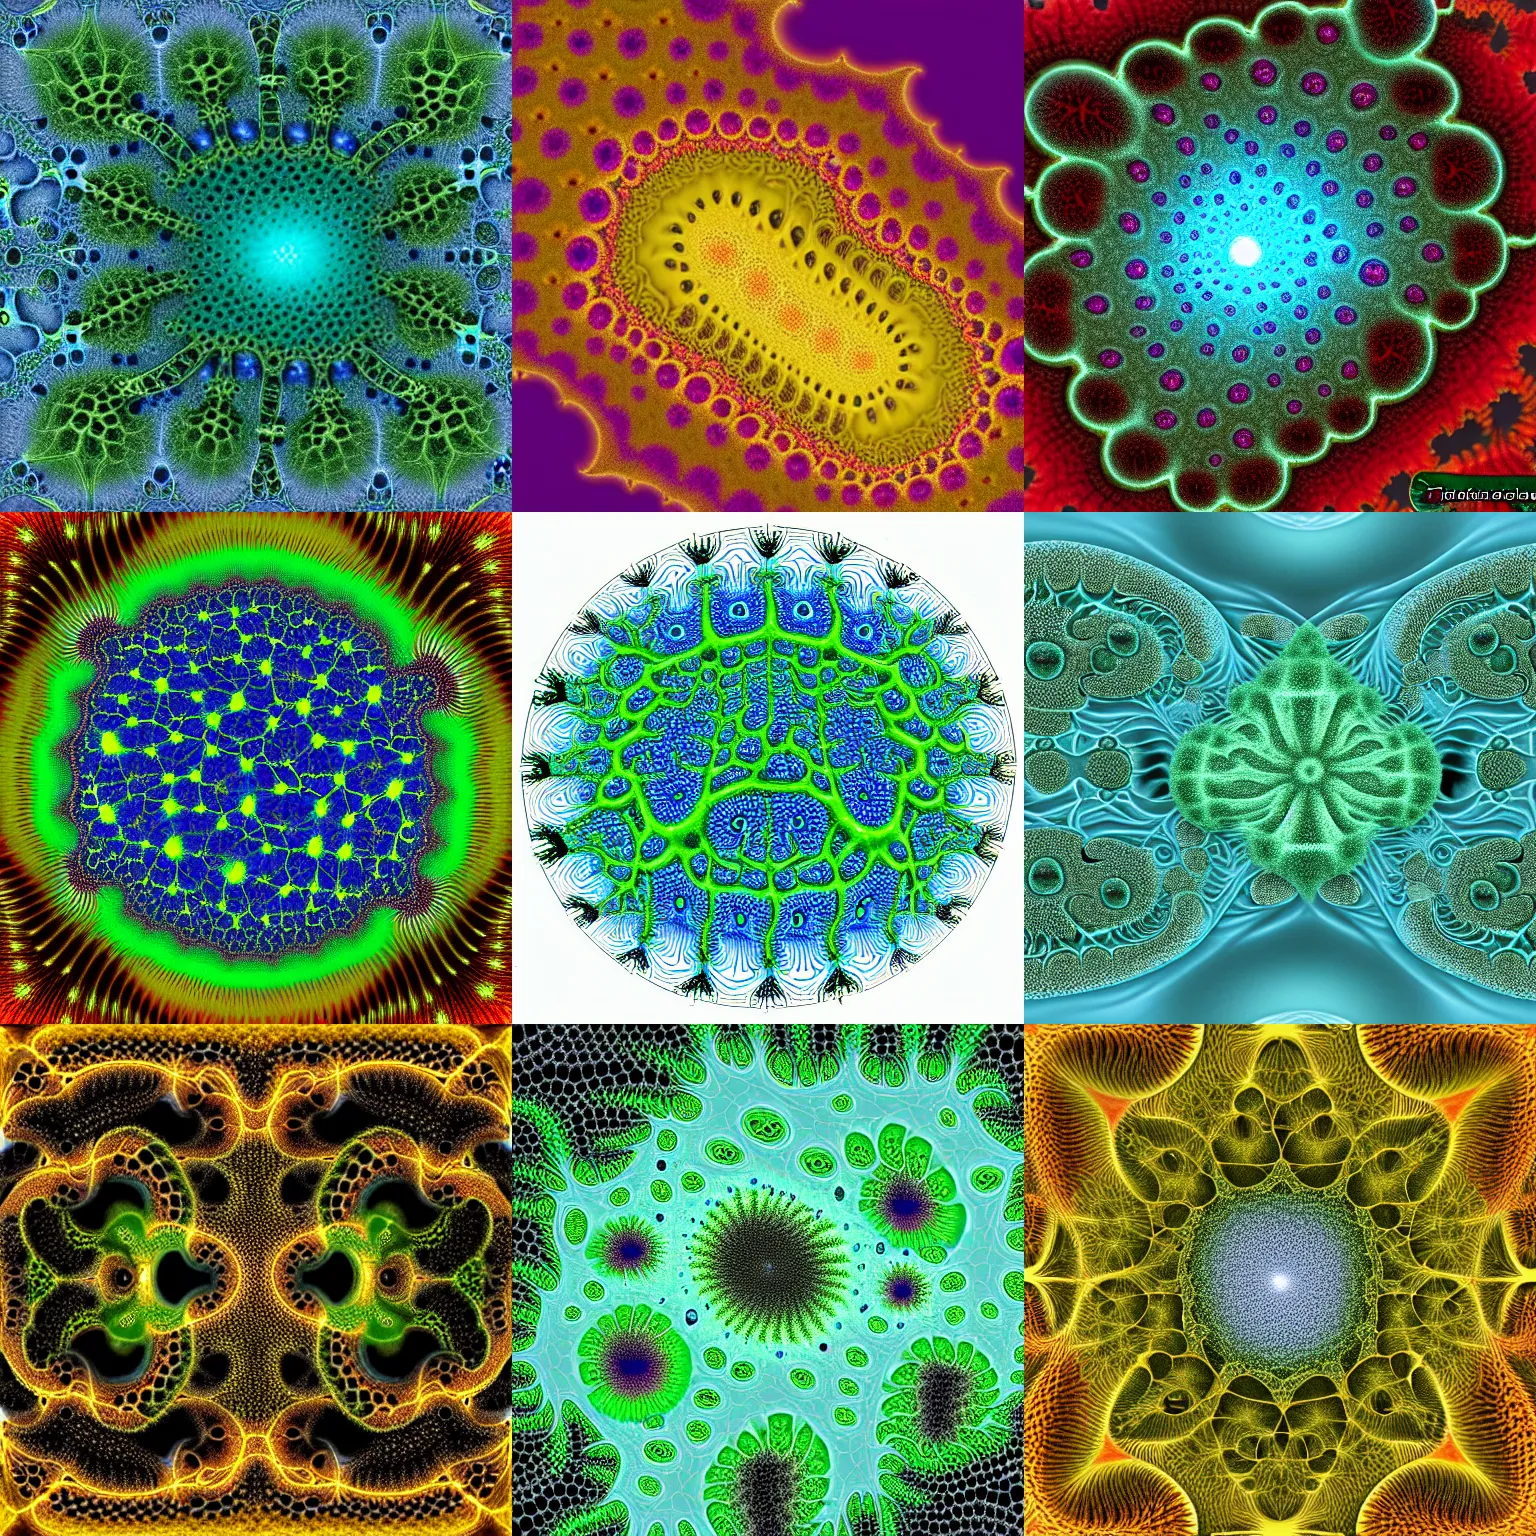 Prompt: infinite slime mold fractal, very detailed, mandelbrot set, mathematics